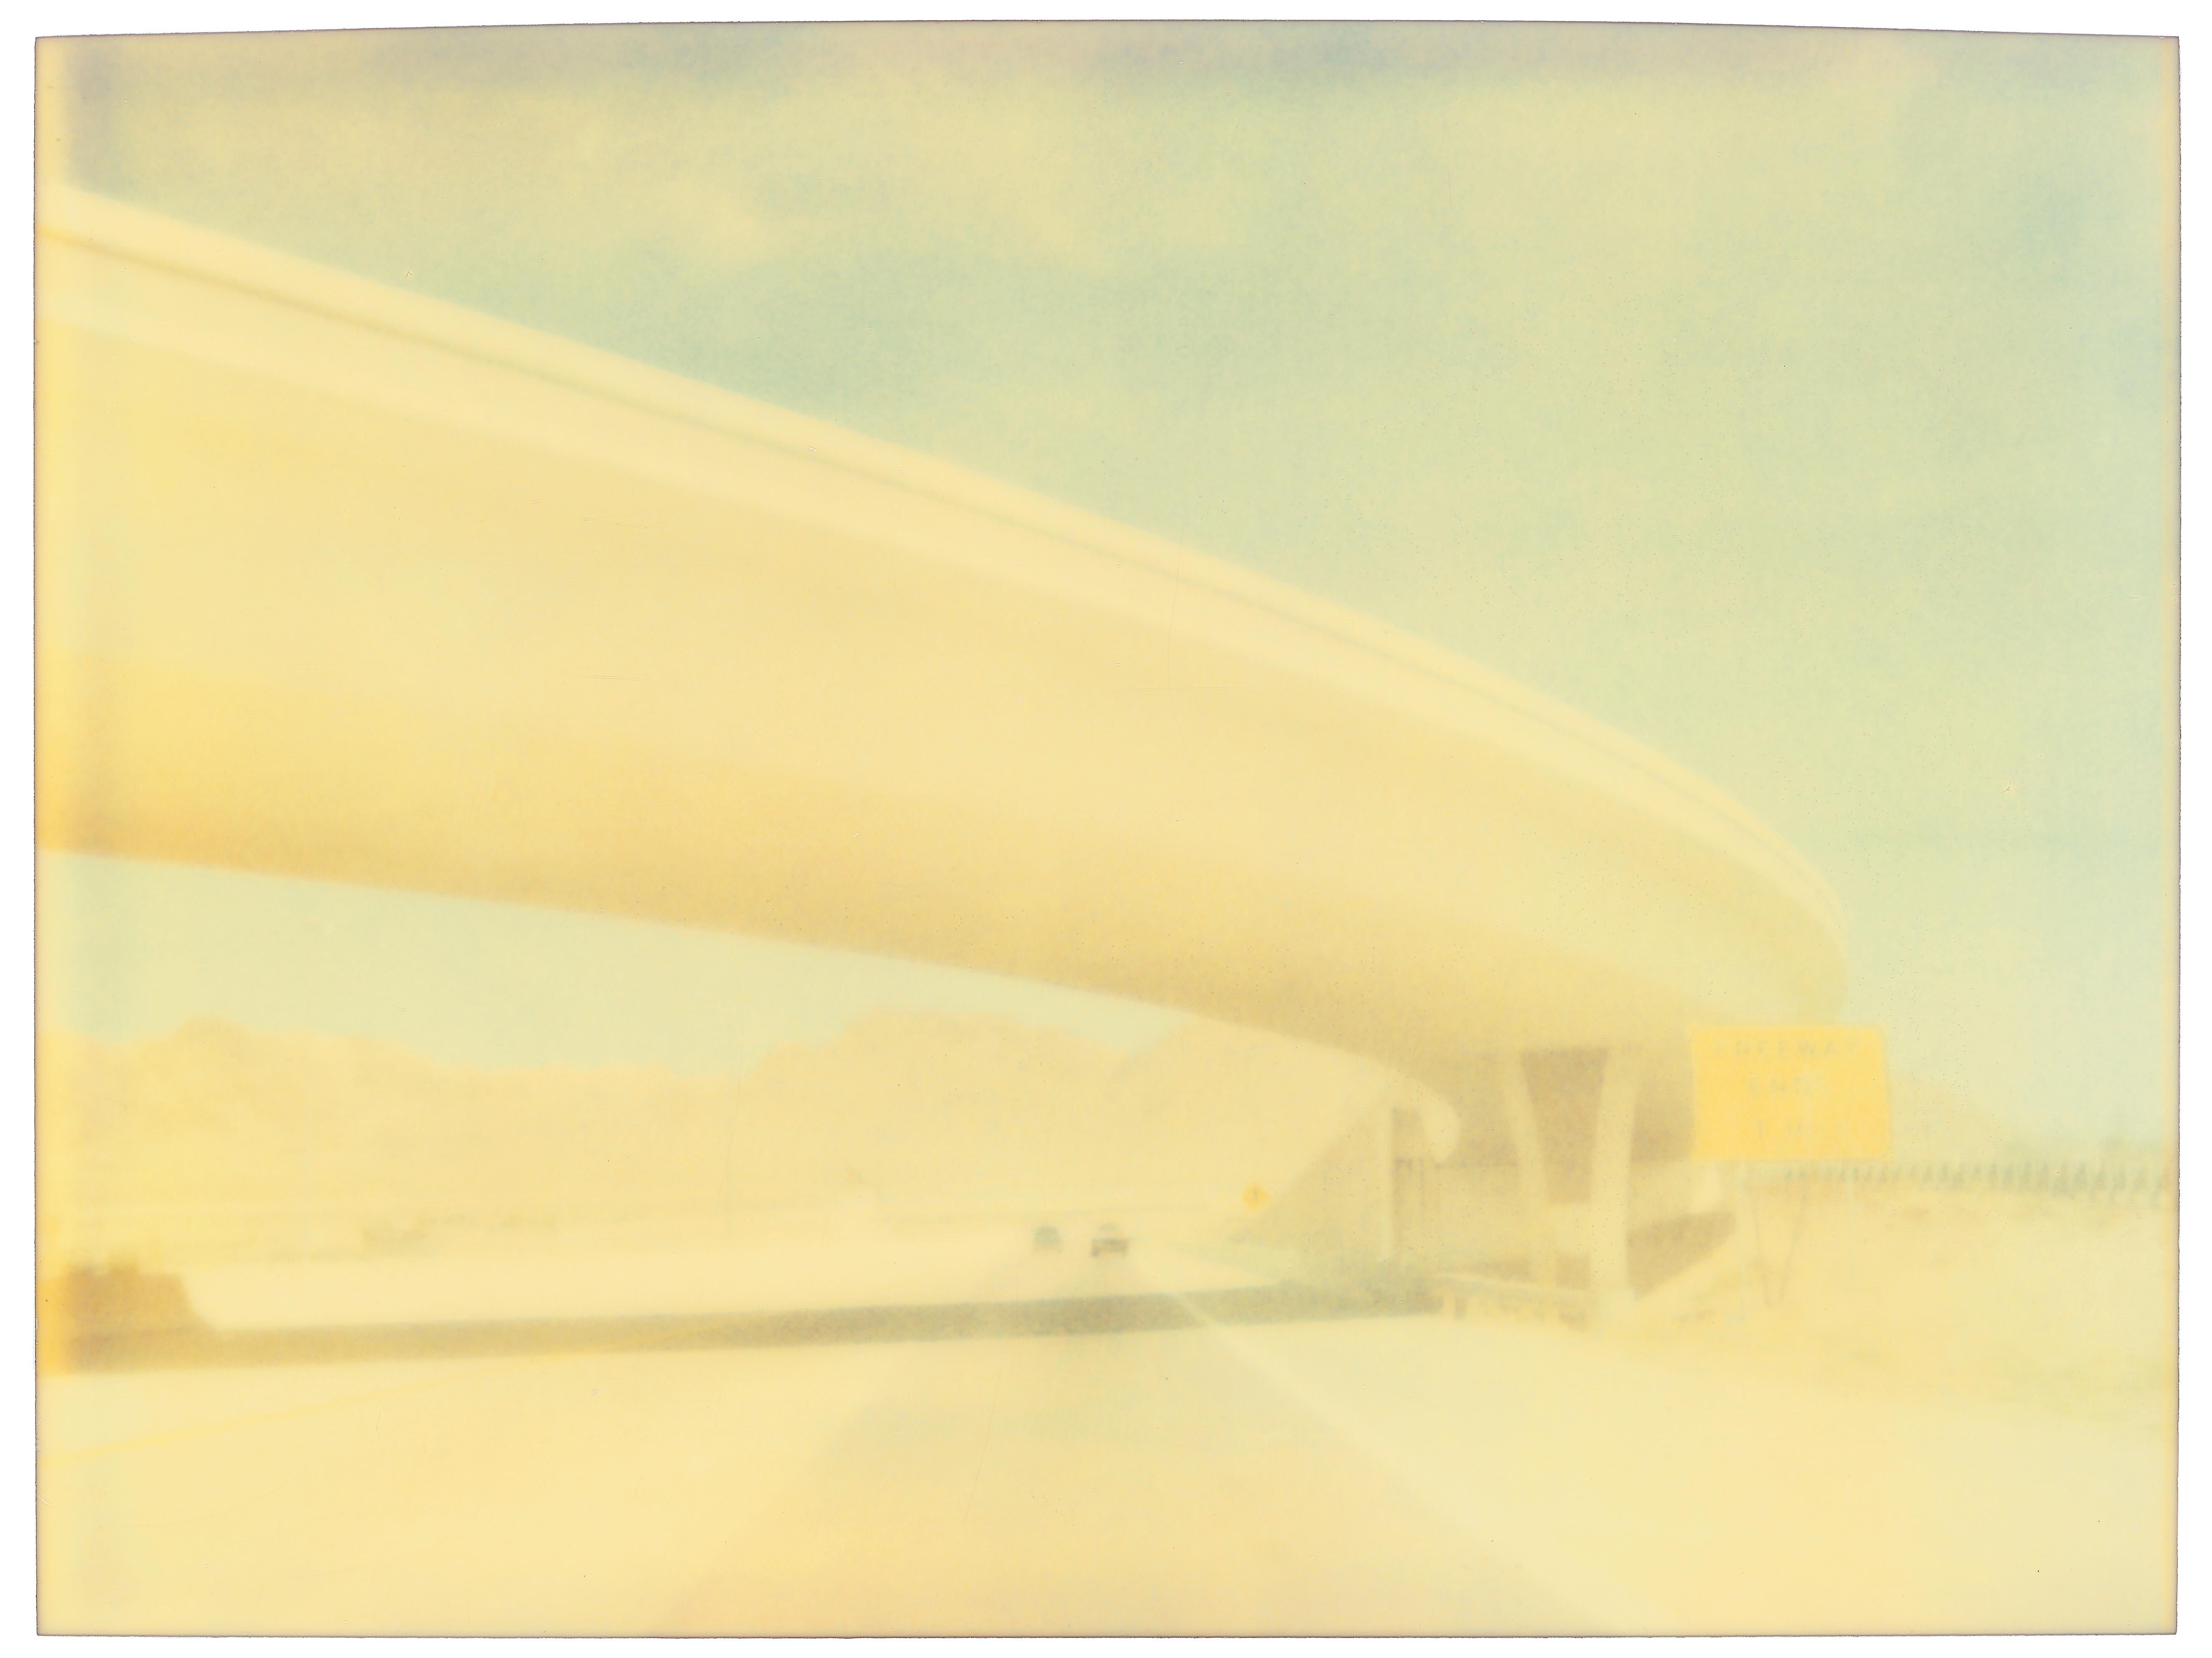 Overpass (Vegas) - Polaroid, Contemporary, 21st Century, Color